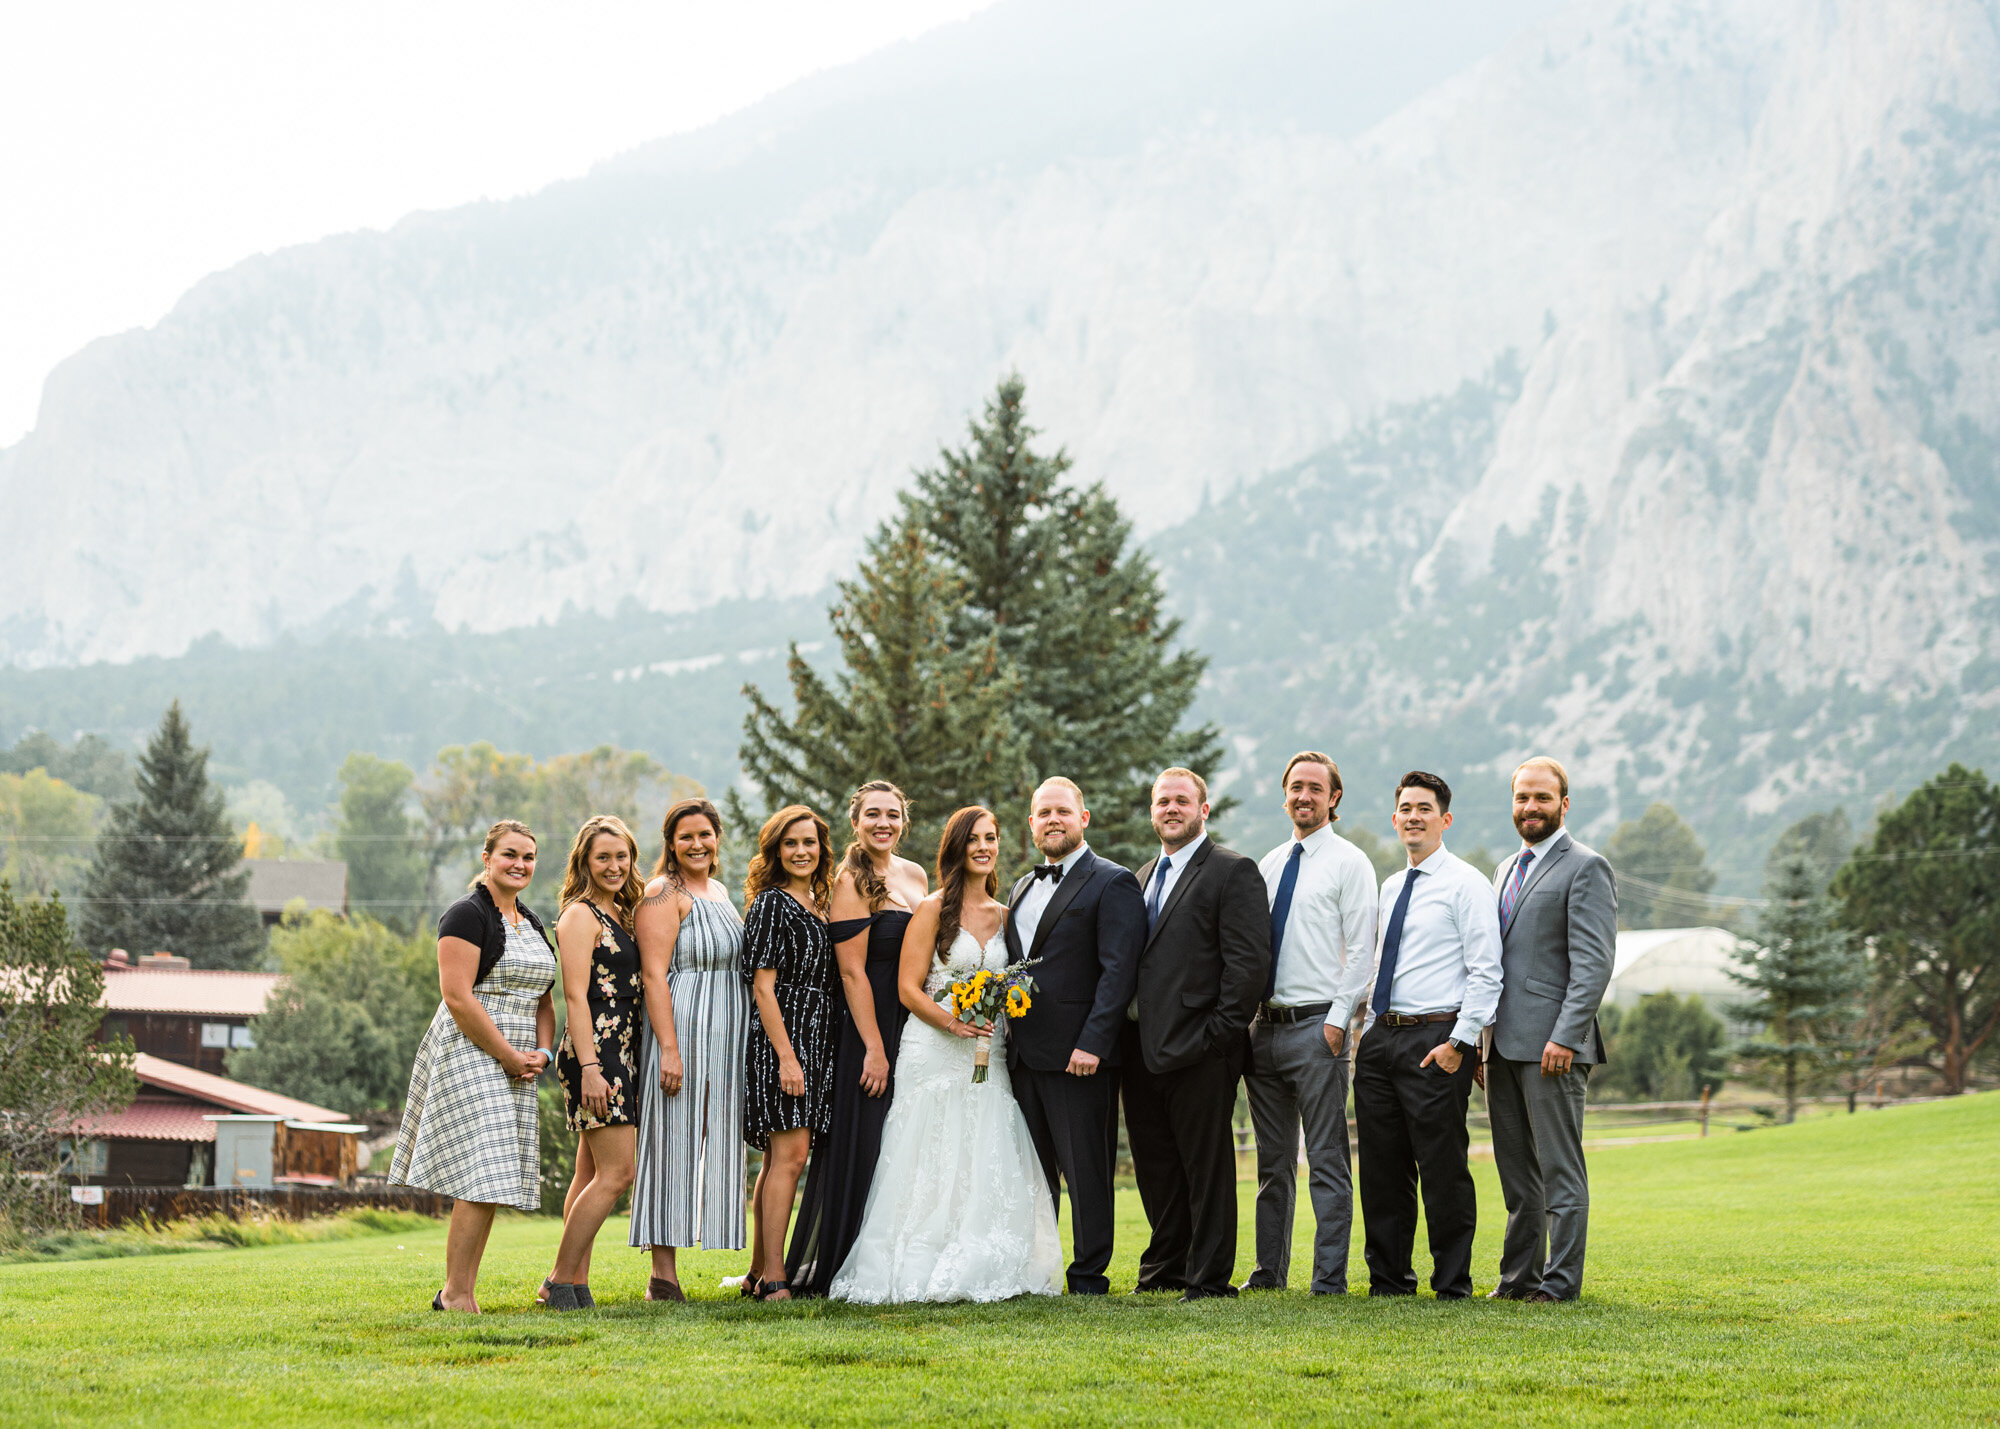 wedding-photography-timeline-denver-colorado-family-formals-reception-details (21).jpg